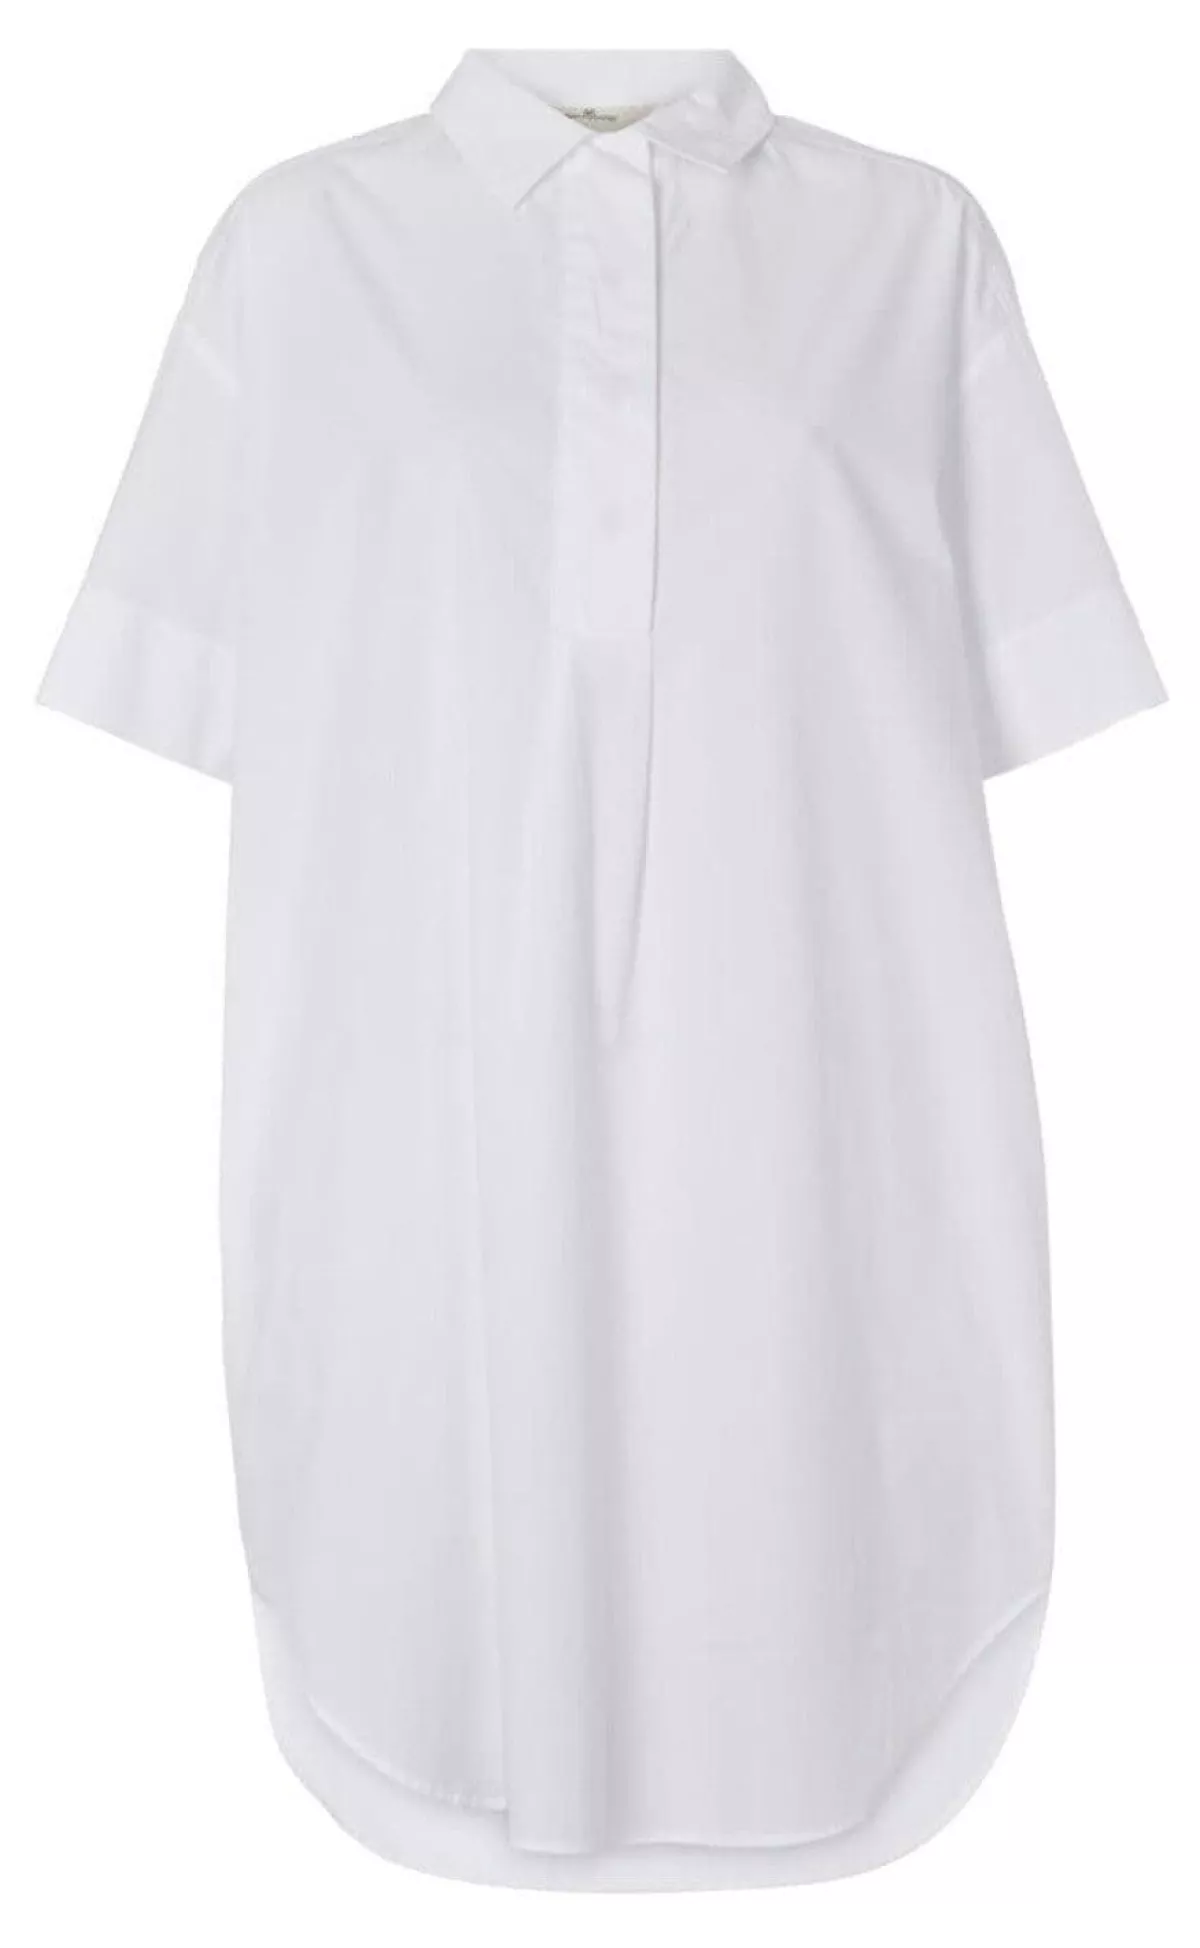 #2 - Basic Apparel Skjortekjole - Vilde Tunique - Bright White